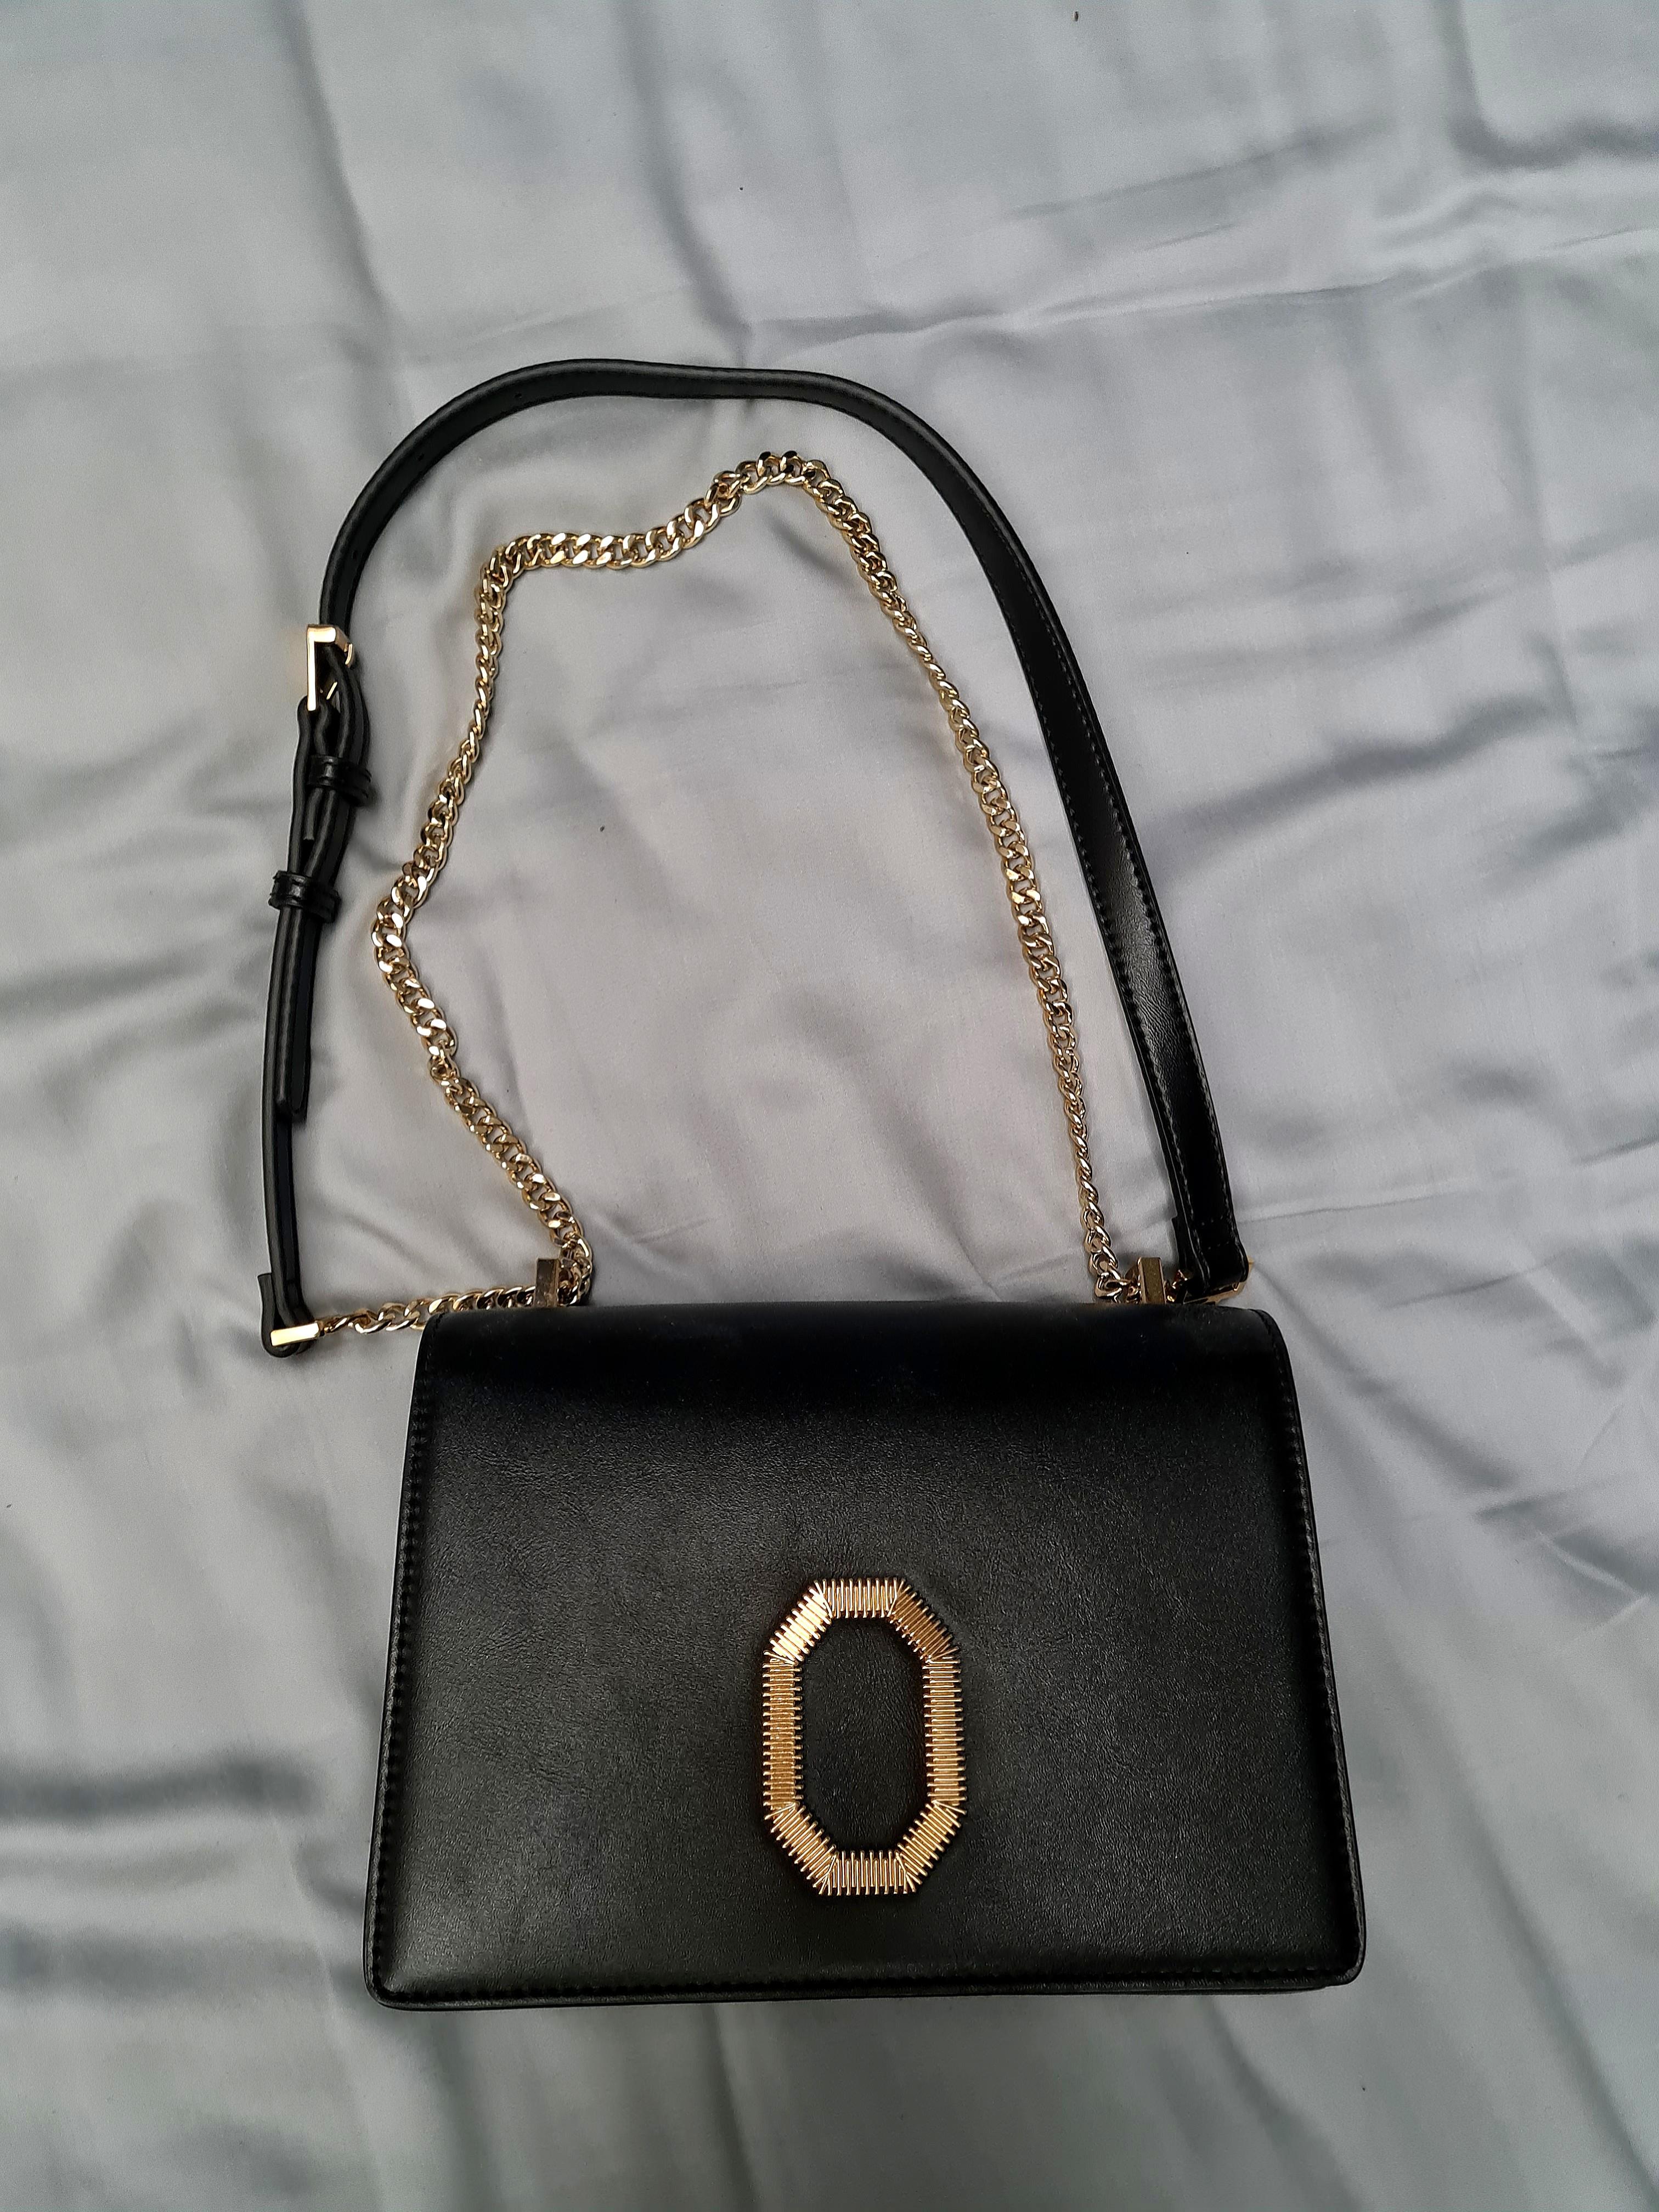 Pedro shoulder bag (black colour with gold hardware), Women's Fashion ...